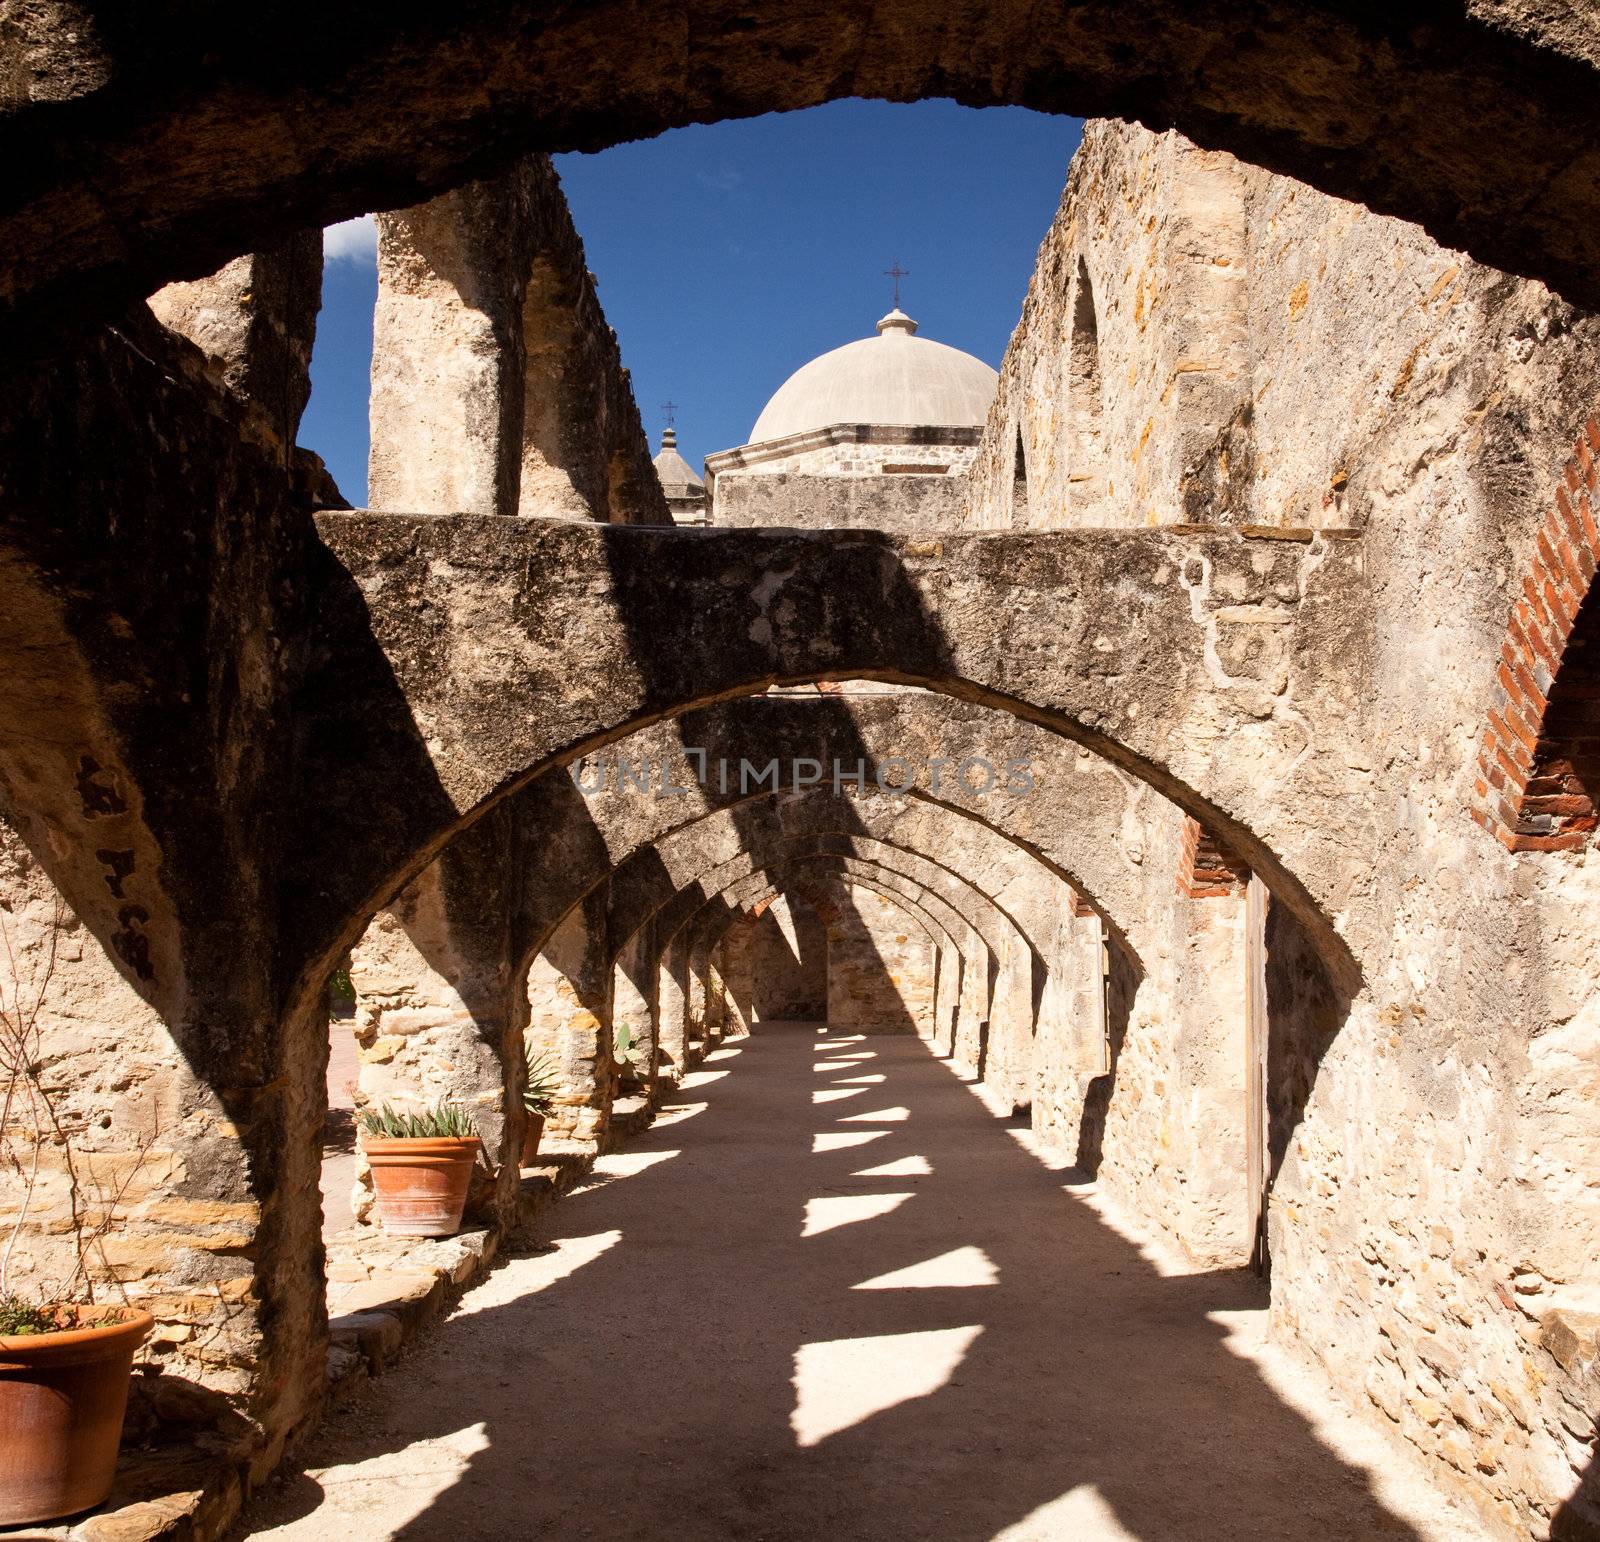 Arches of San Jan Mission near San Antonio by steheap